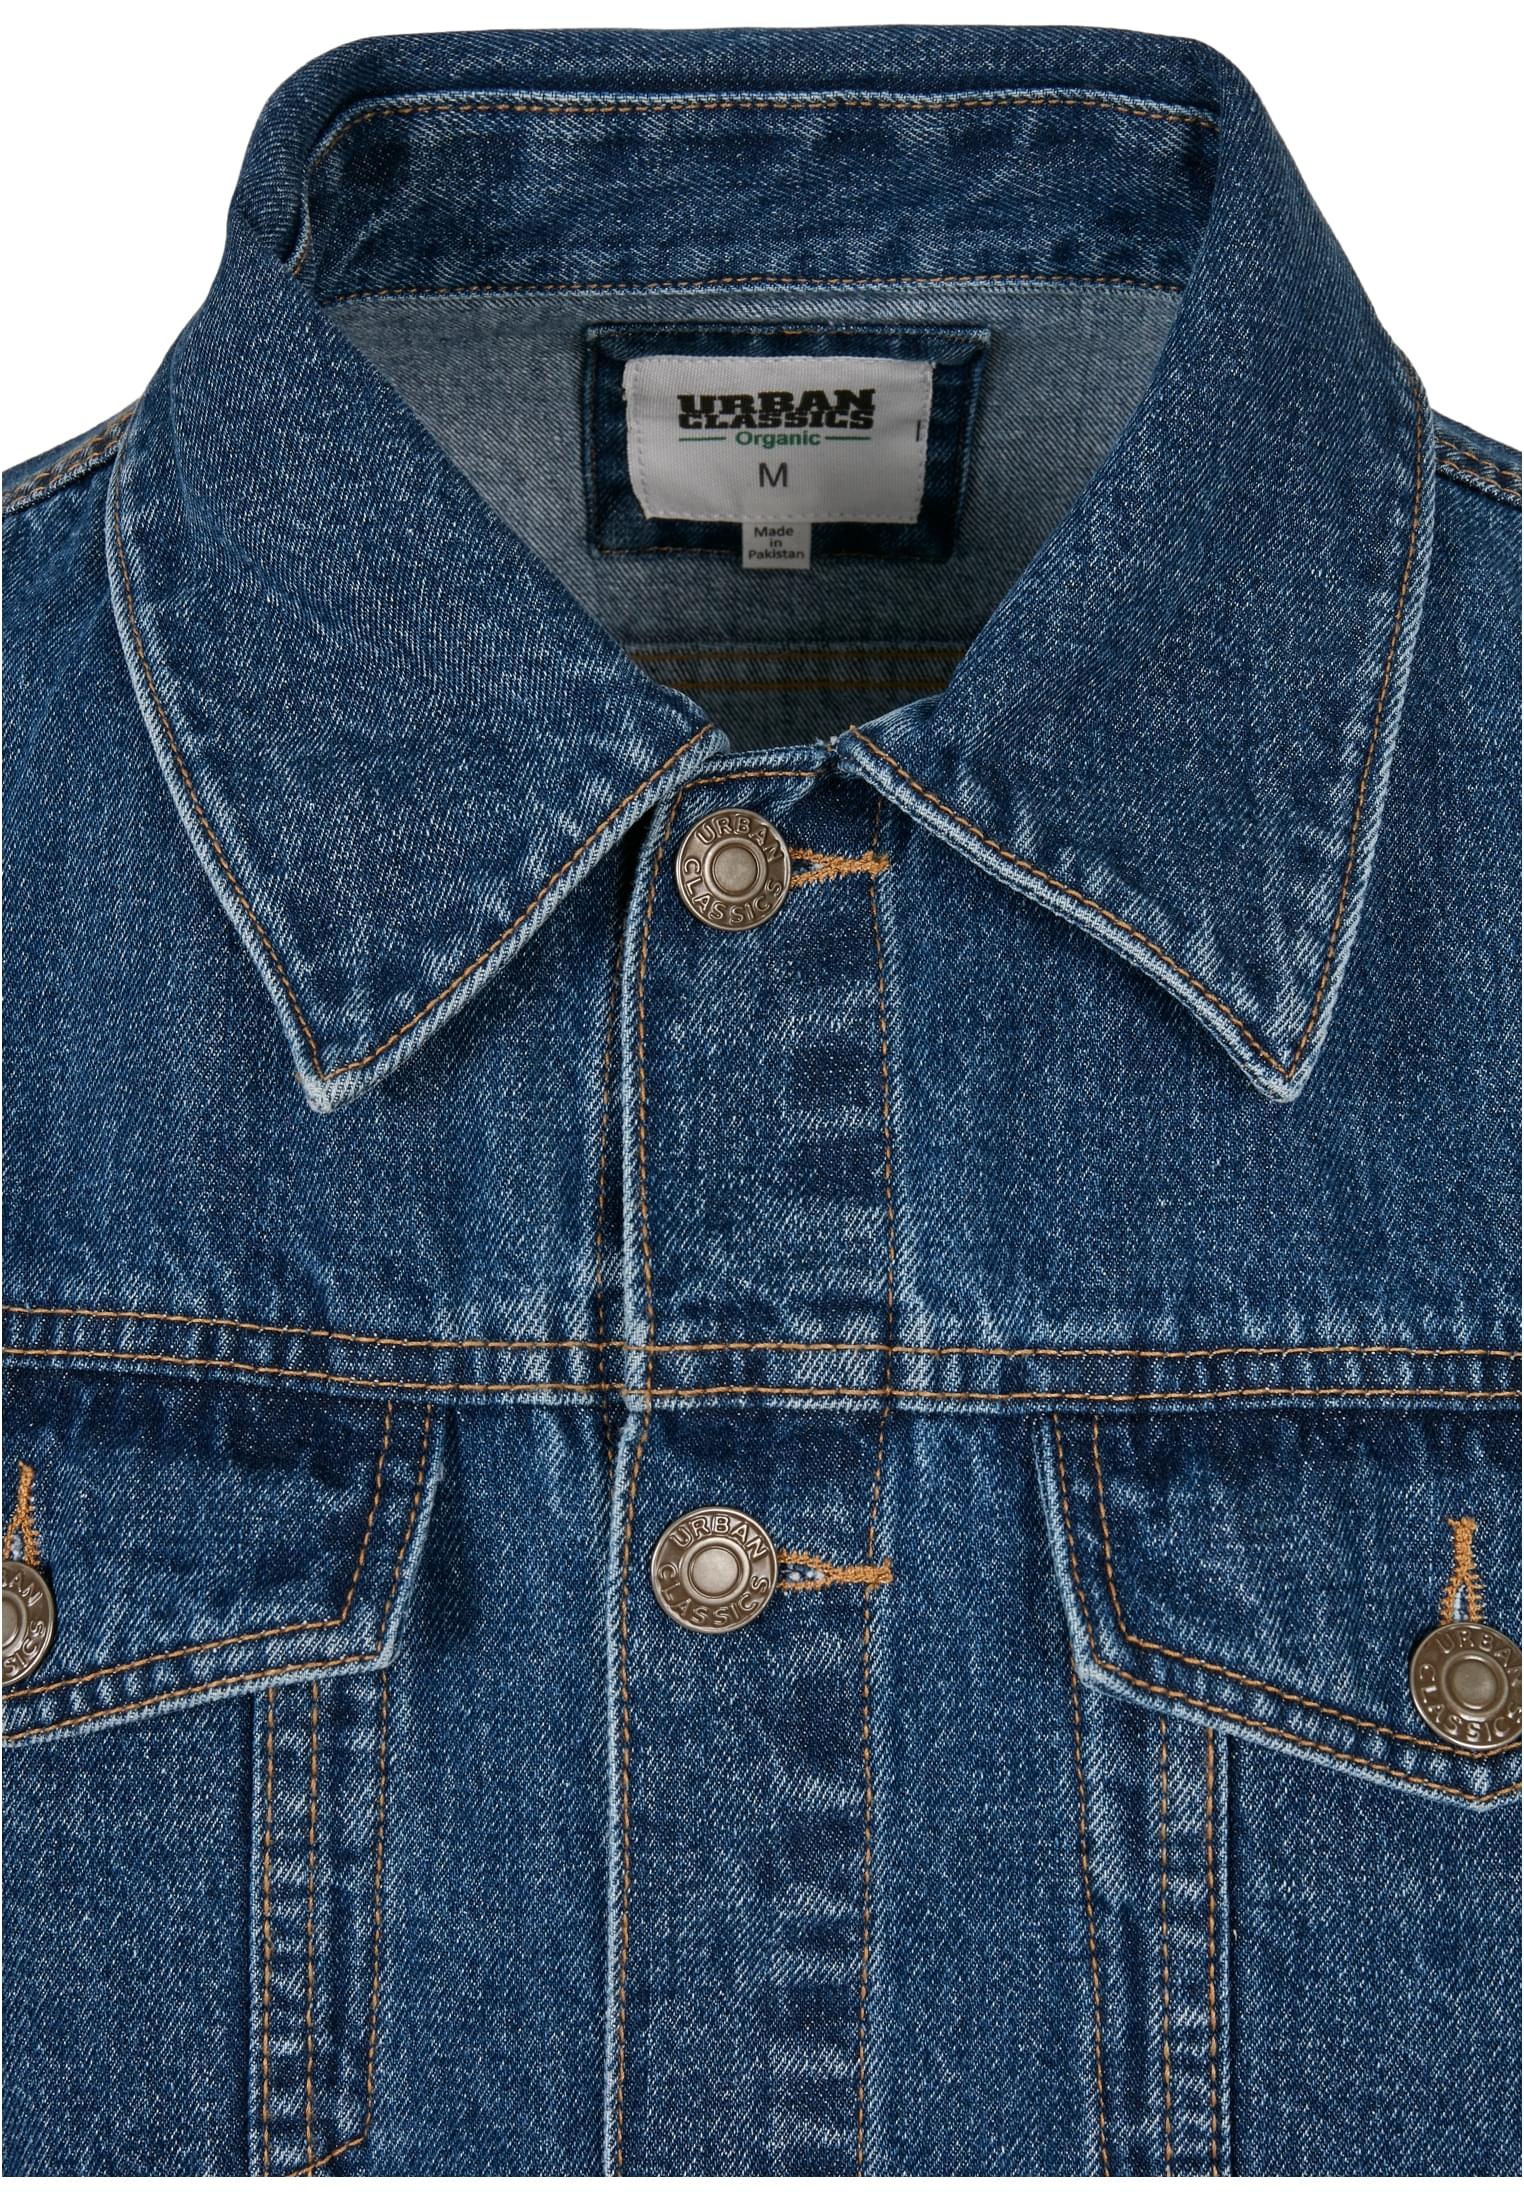 URBAN CLASSICS Jeansjacke »Urban Classics Herren Organic Basic Denim Jacket«, (1 St.), ohne Kapuze